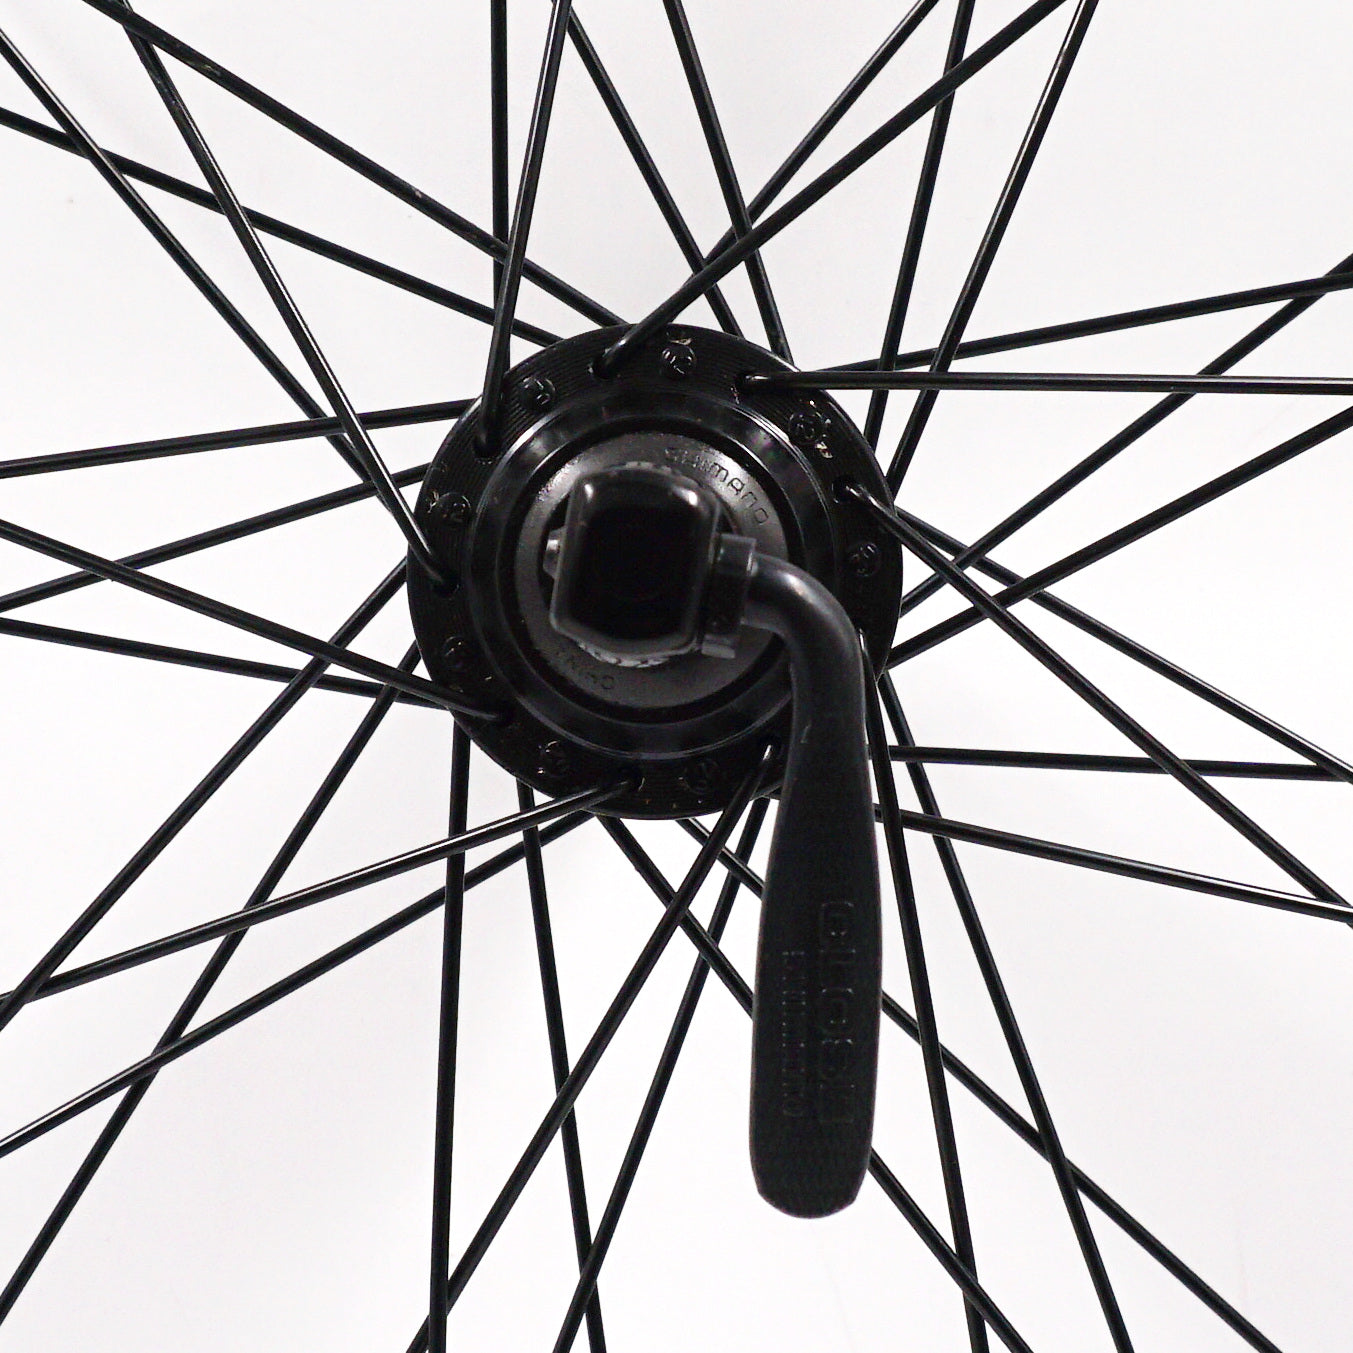 Weinmann 519 26-inch Rear Mountain Bike Shimano HG Cassette Type Rear Wheel - The Bikesmiths